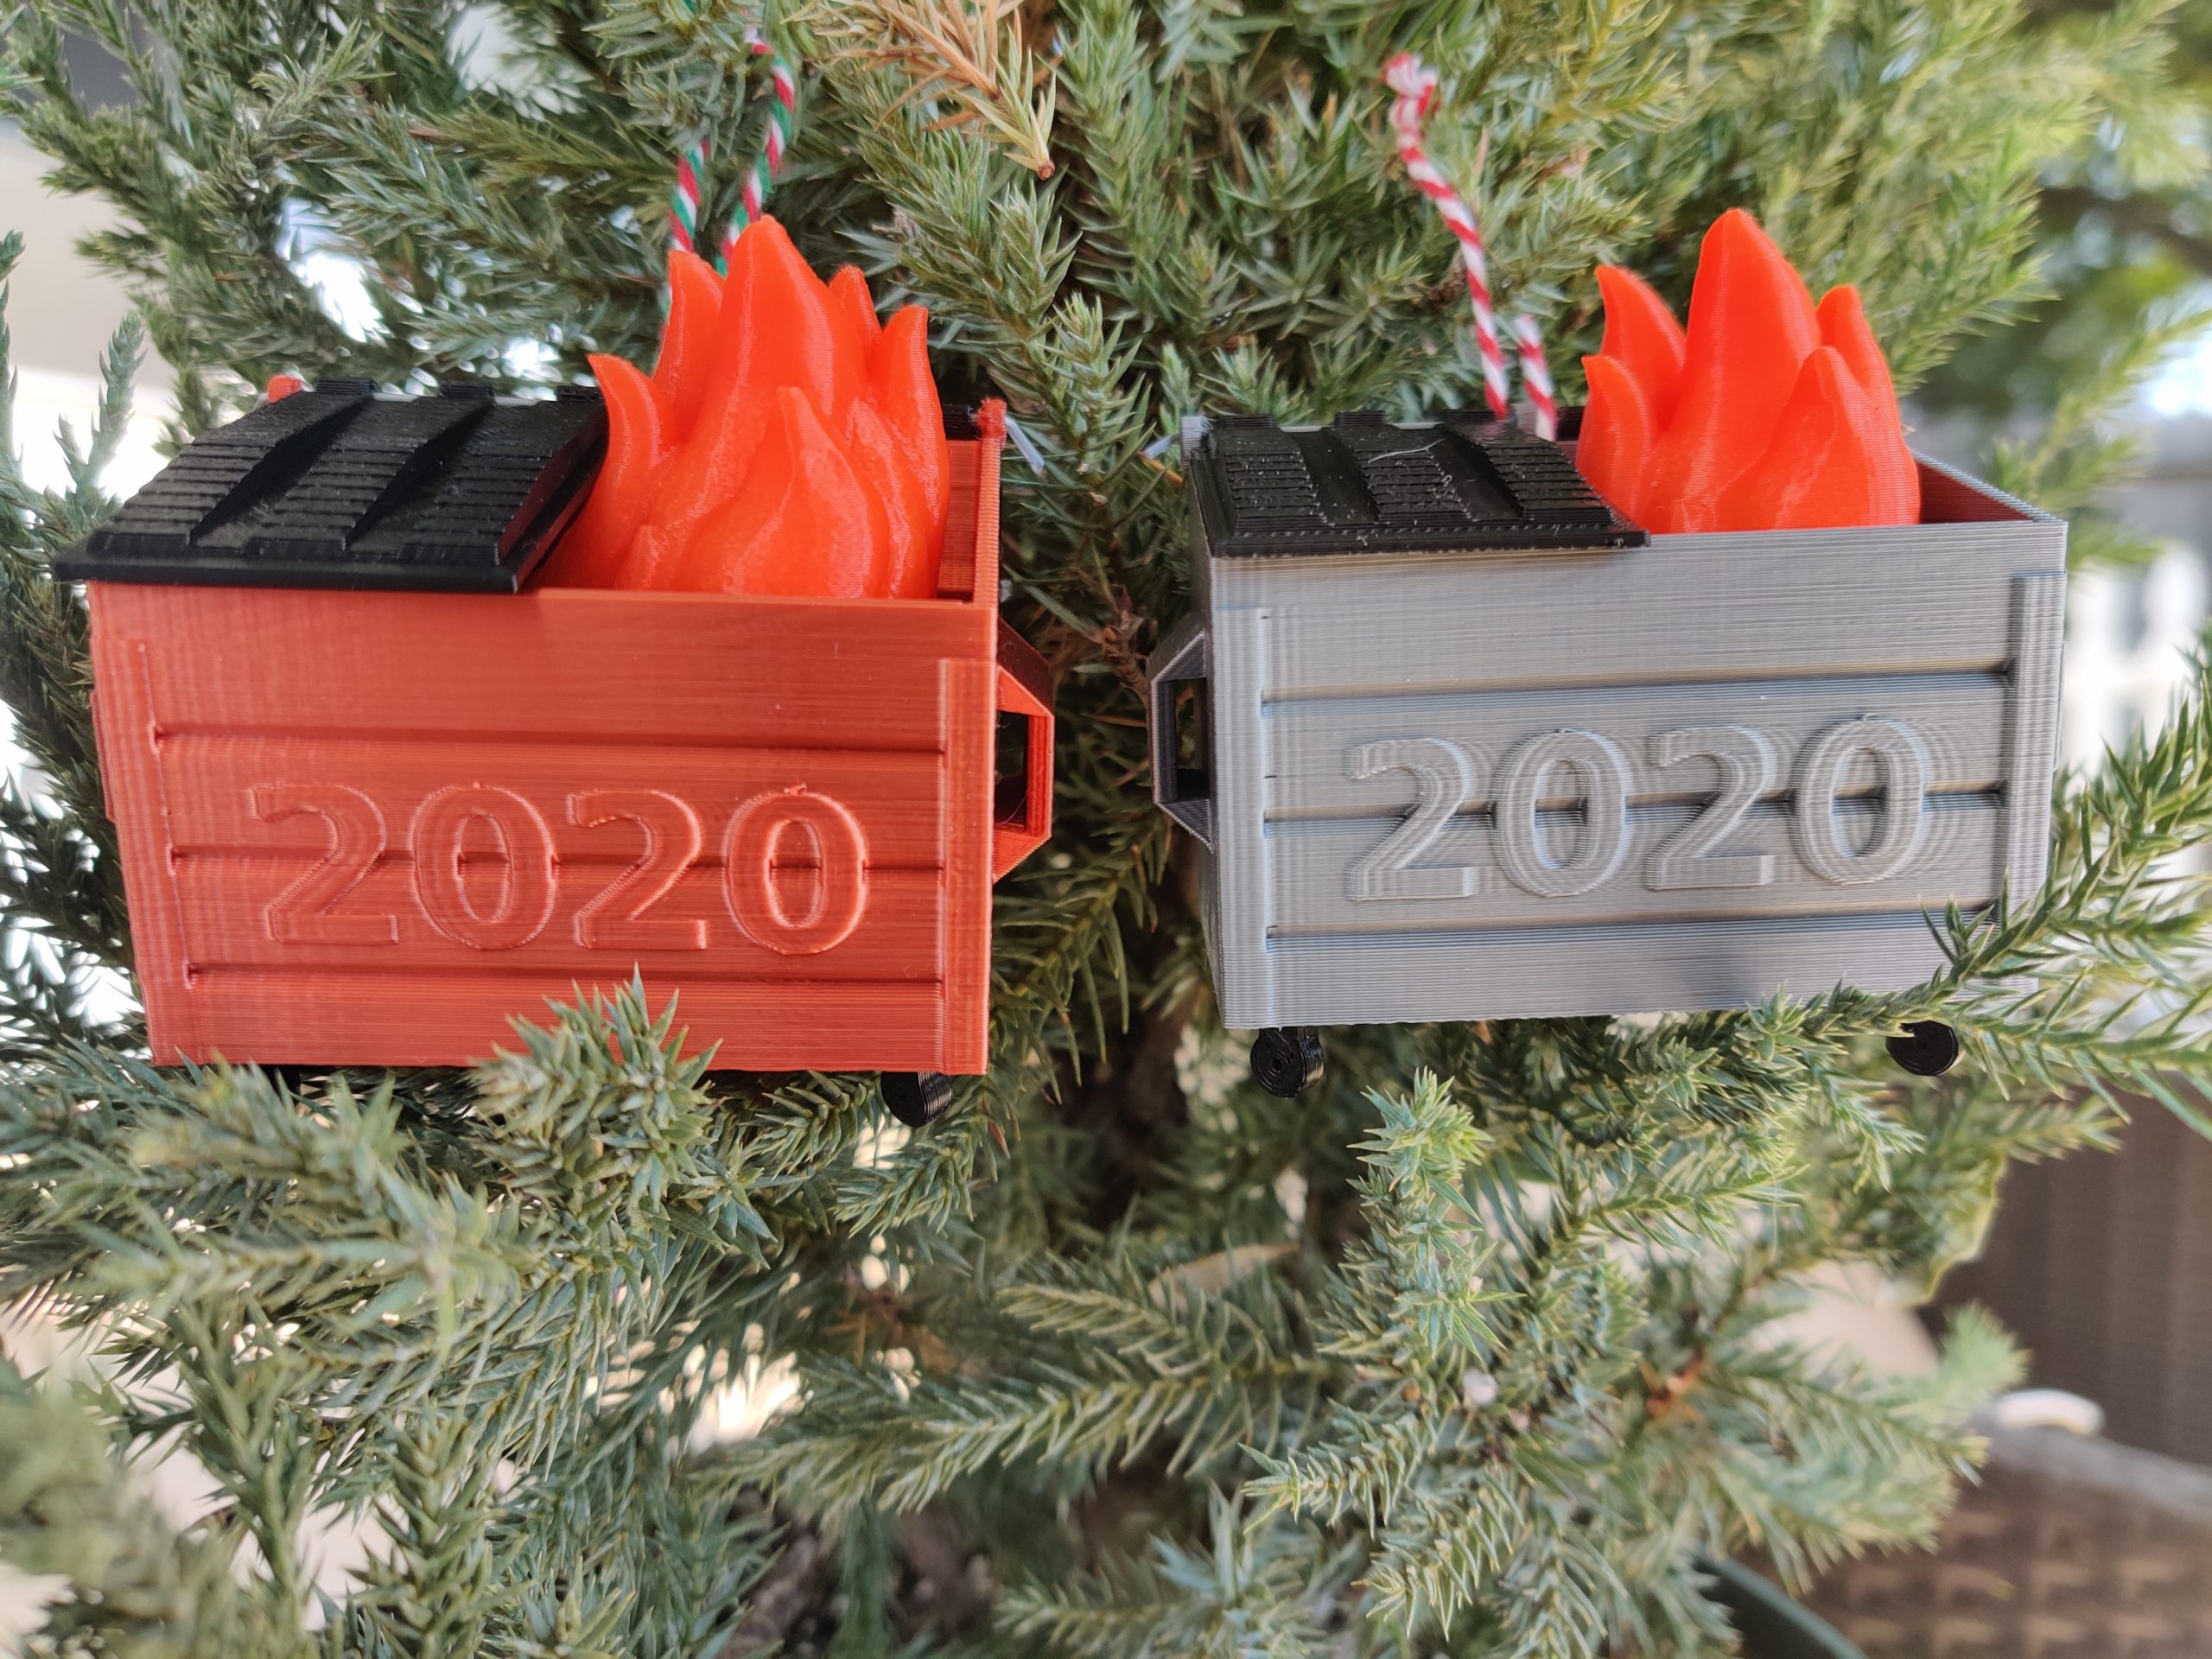 Details about   2020 Dumpster Fire Ornament 3D printed 